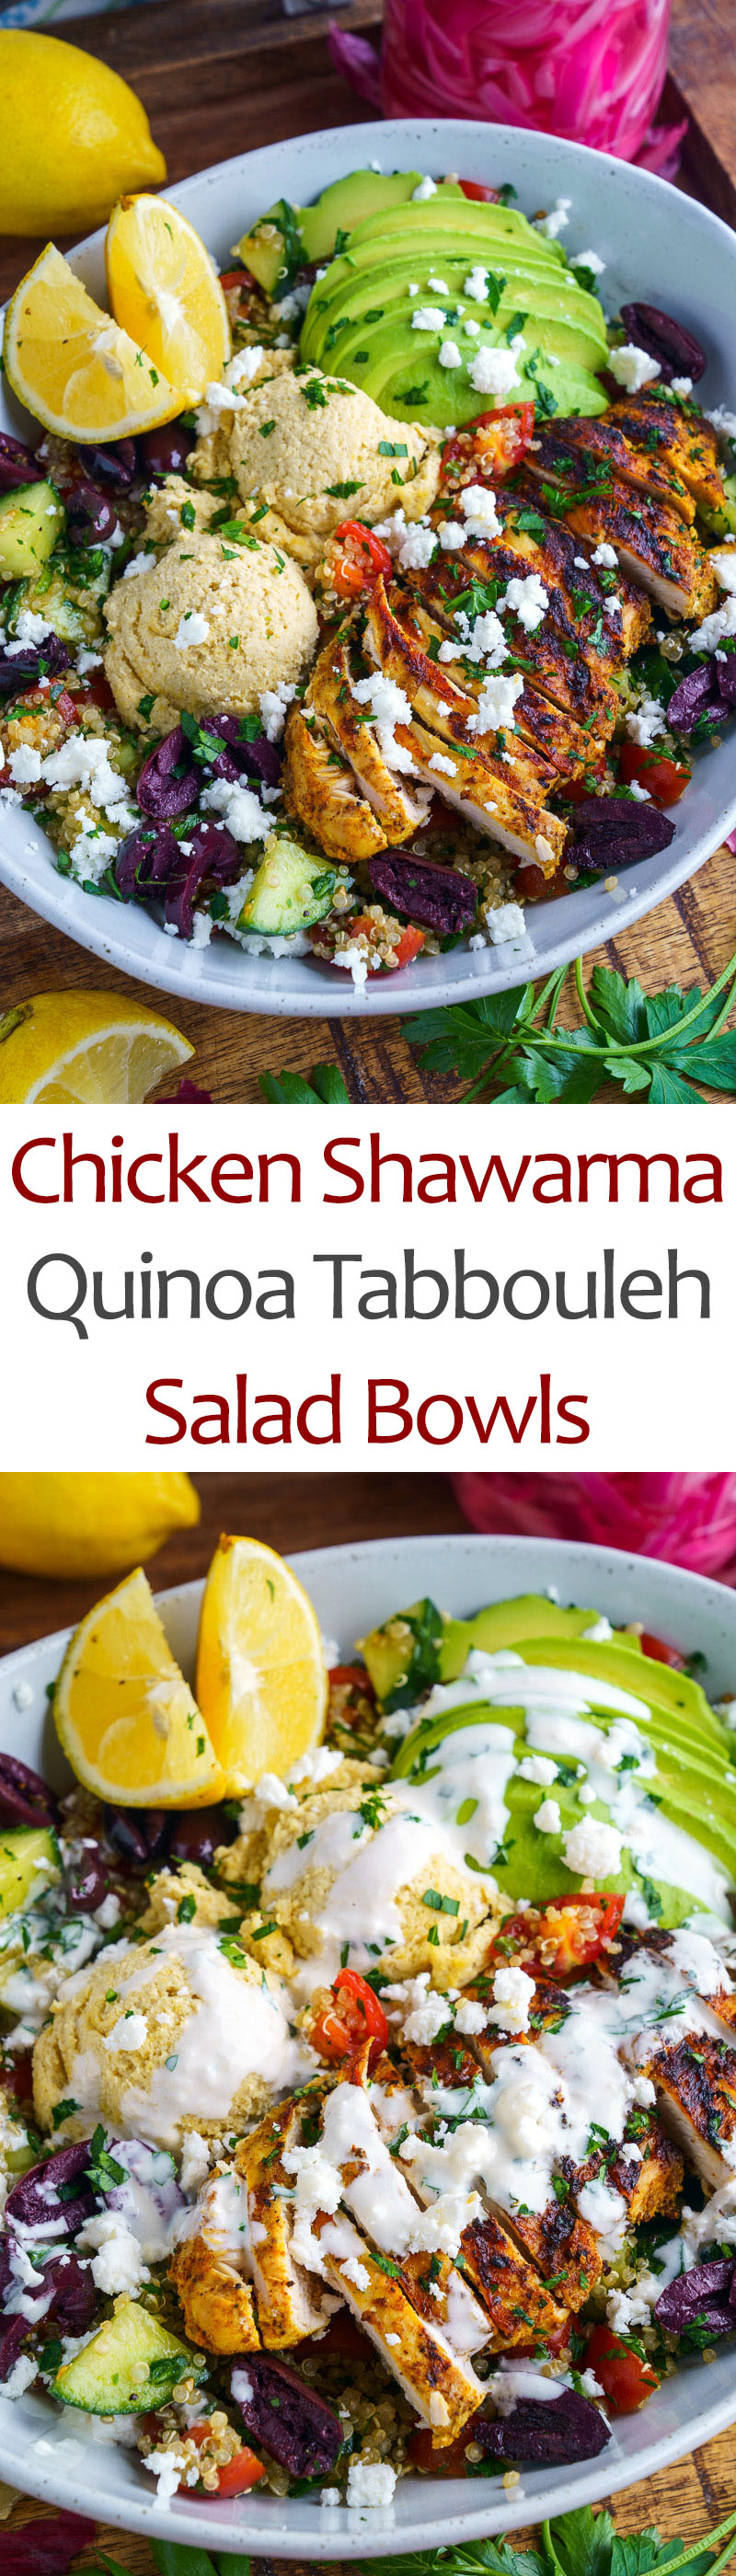 Chicken Shawarma Quinoa Tabbouleh Salad Bowls